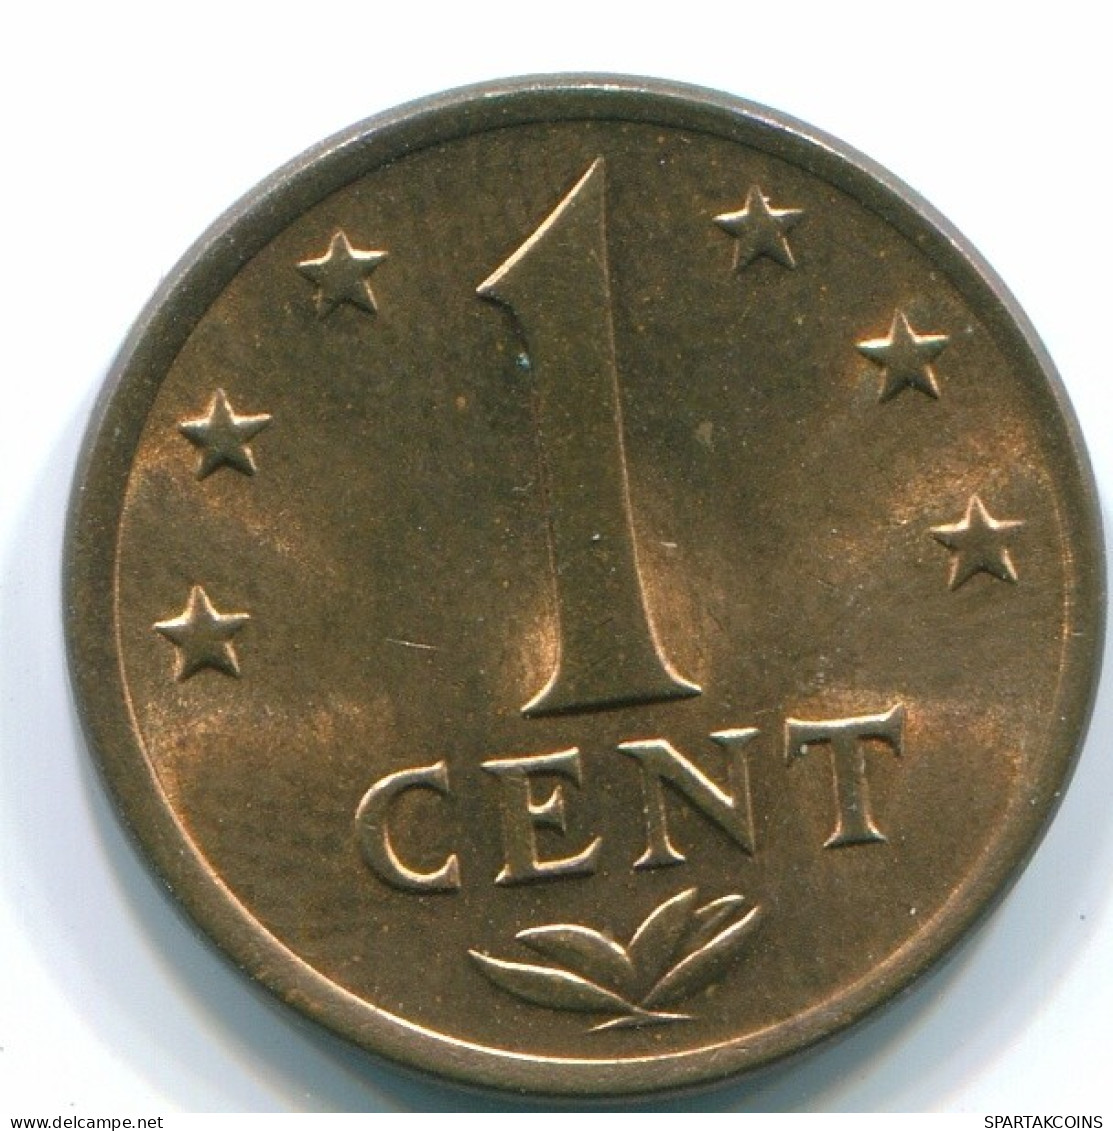 1 CENT 1976 NETHERLANDS ANTILLES Bronze Colonial Coin #S10701.U.A - Niederländische Antillen